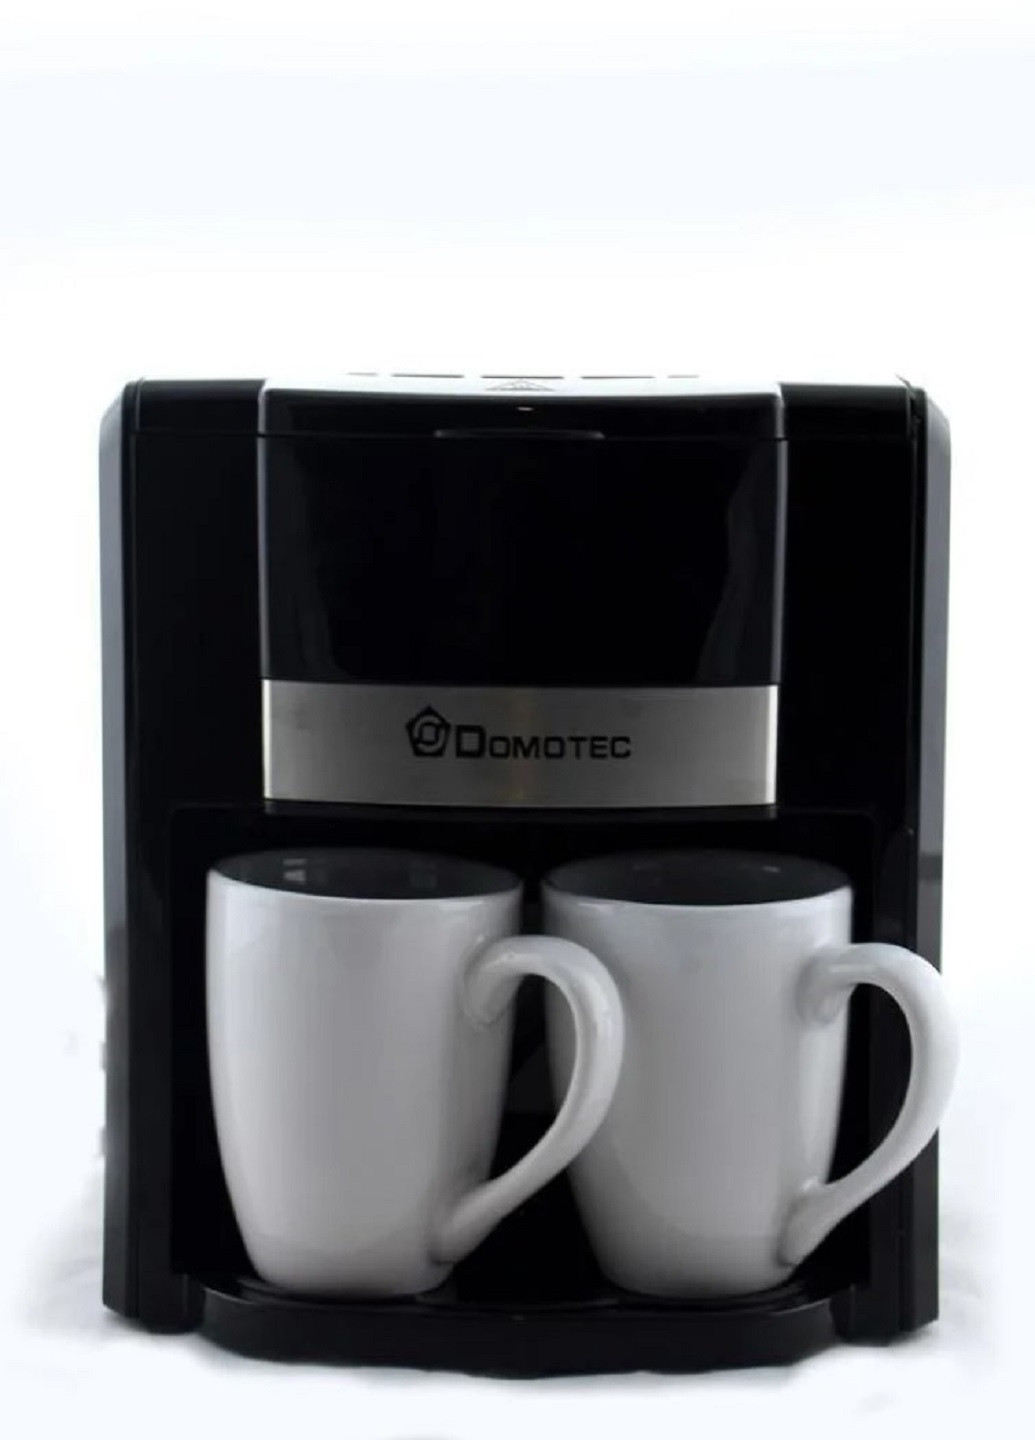 Капельная кофеварка MS-0708 на 2 чашки VTech (253319204)